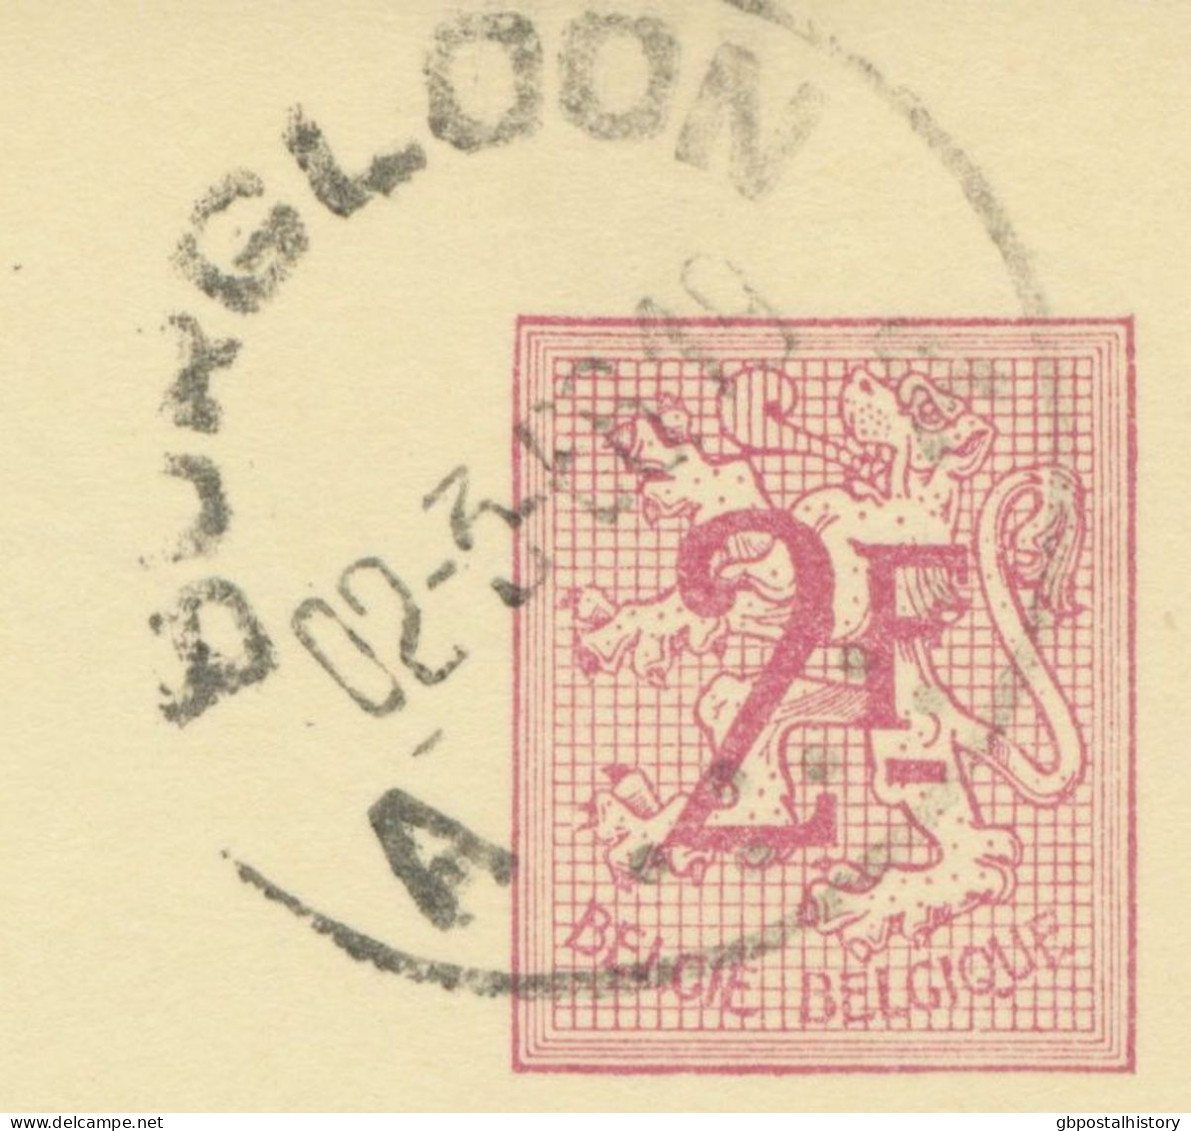 BELGIUM VILLAGE POSTMARKS  BORGLOON A SC With Dots 1968 (Postal Stationery 2 F, PUBLIBEL 2088) - Puntstempels